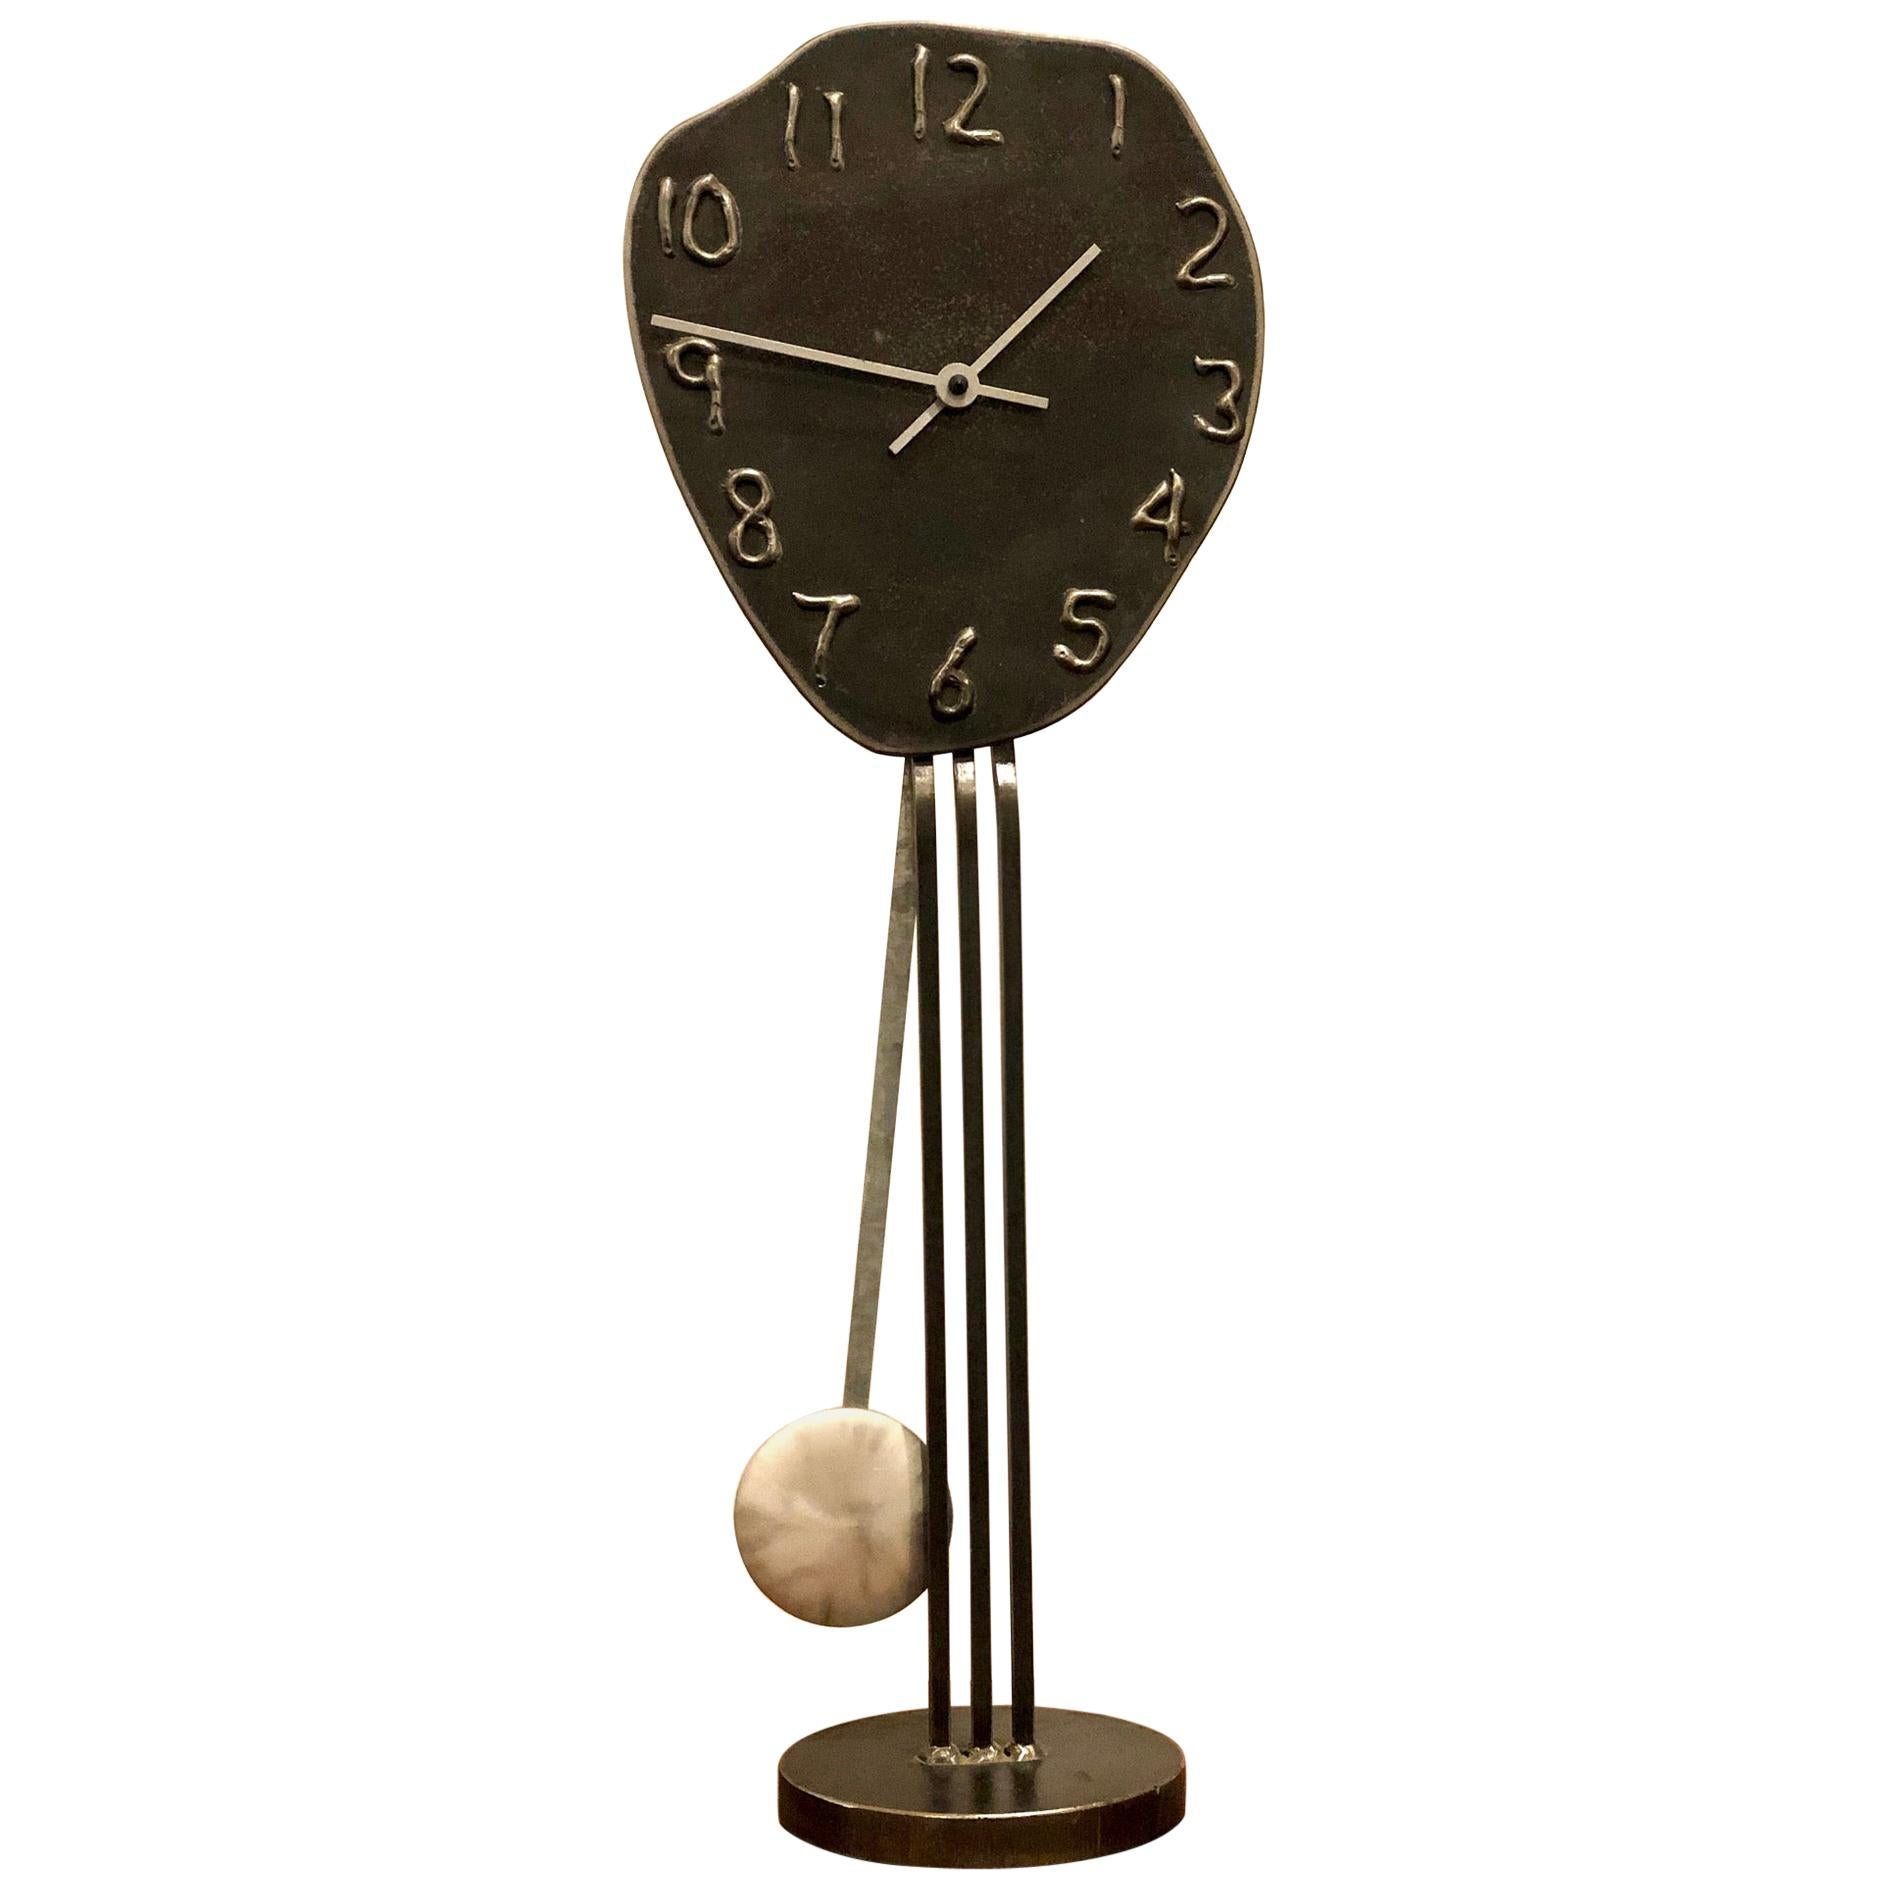 Freeform Tall Table Clock by Artist Jon Surriugarte California Design